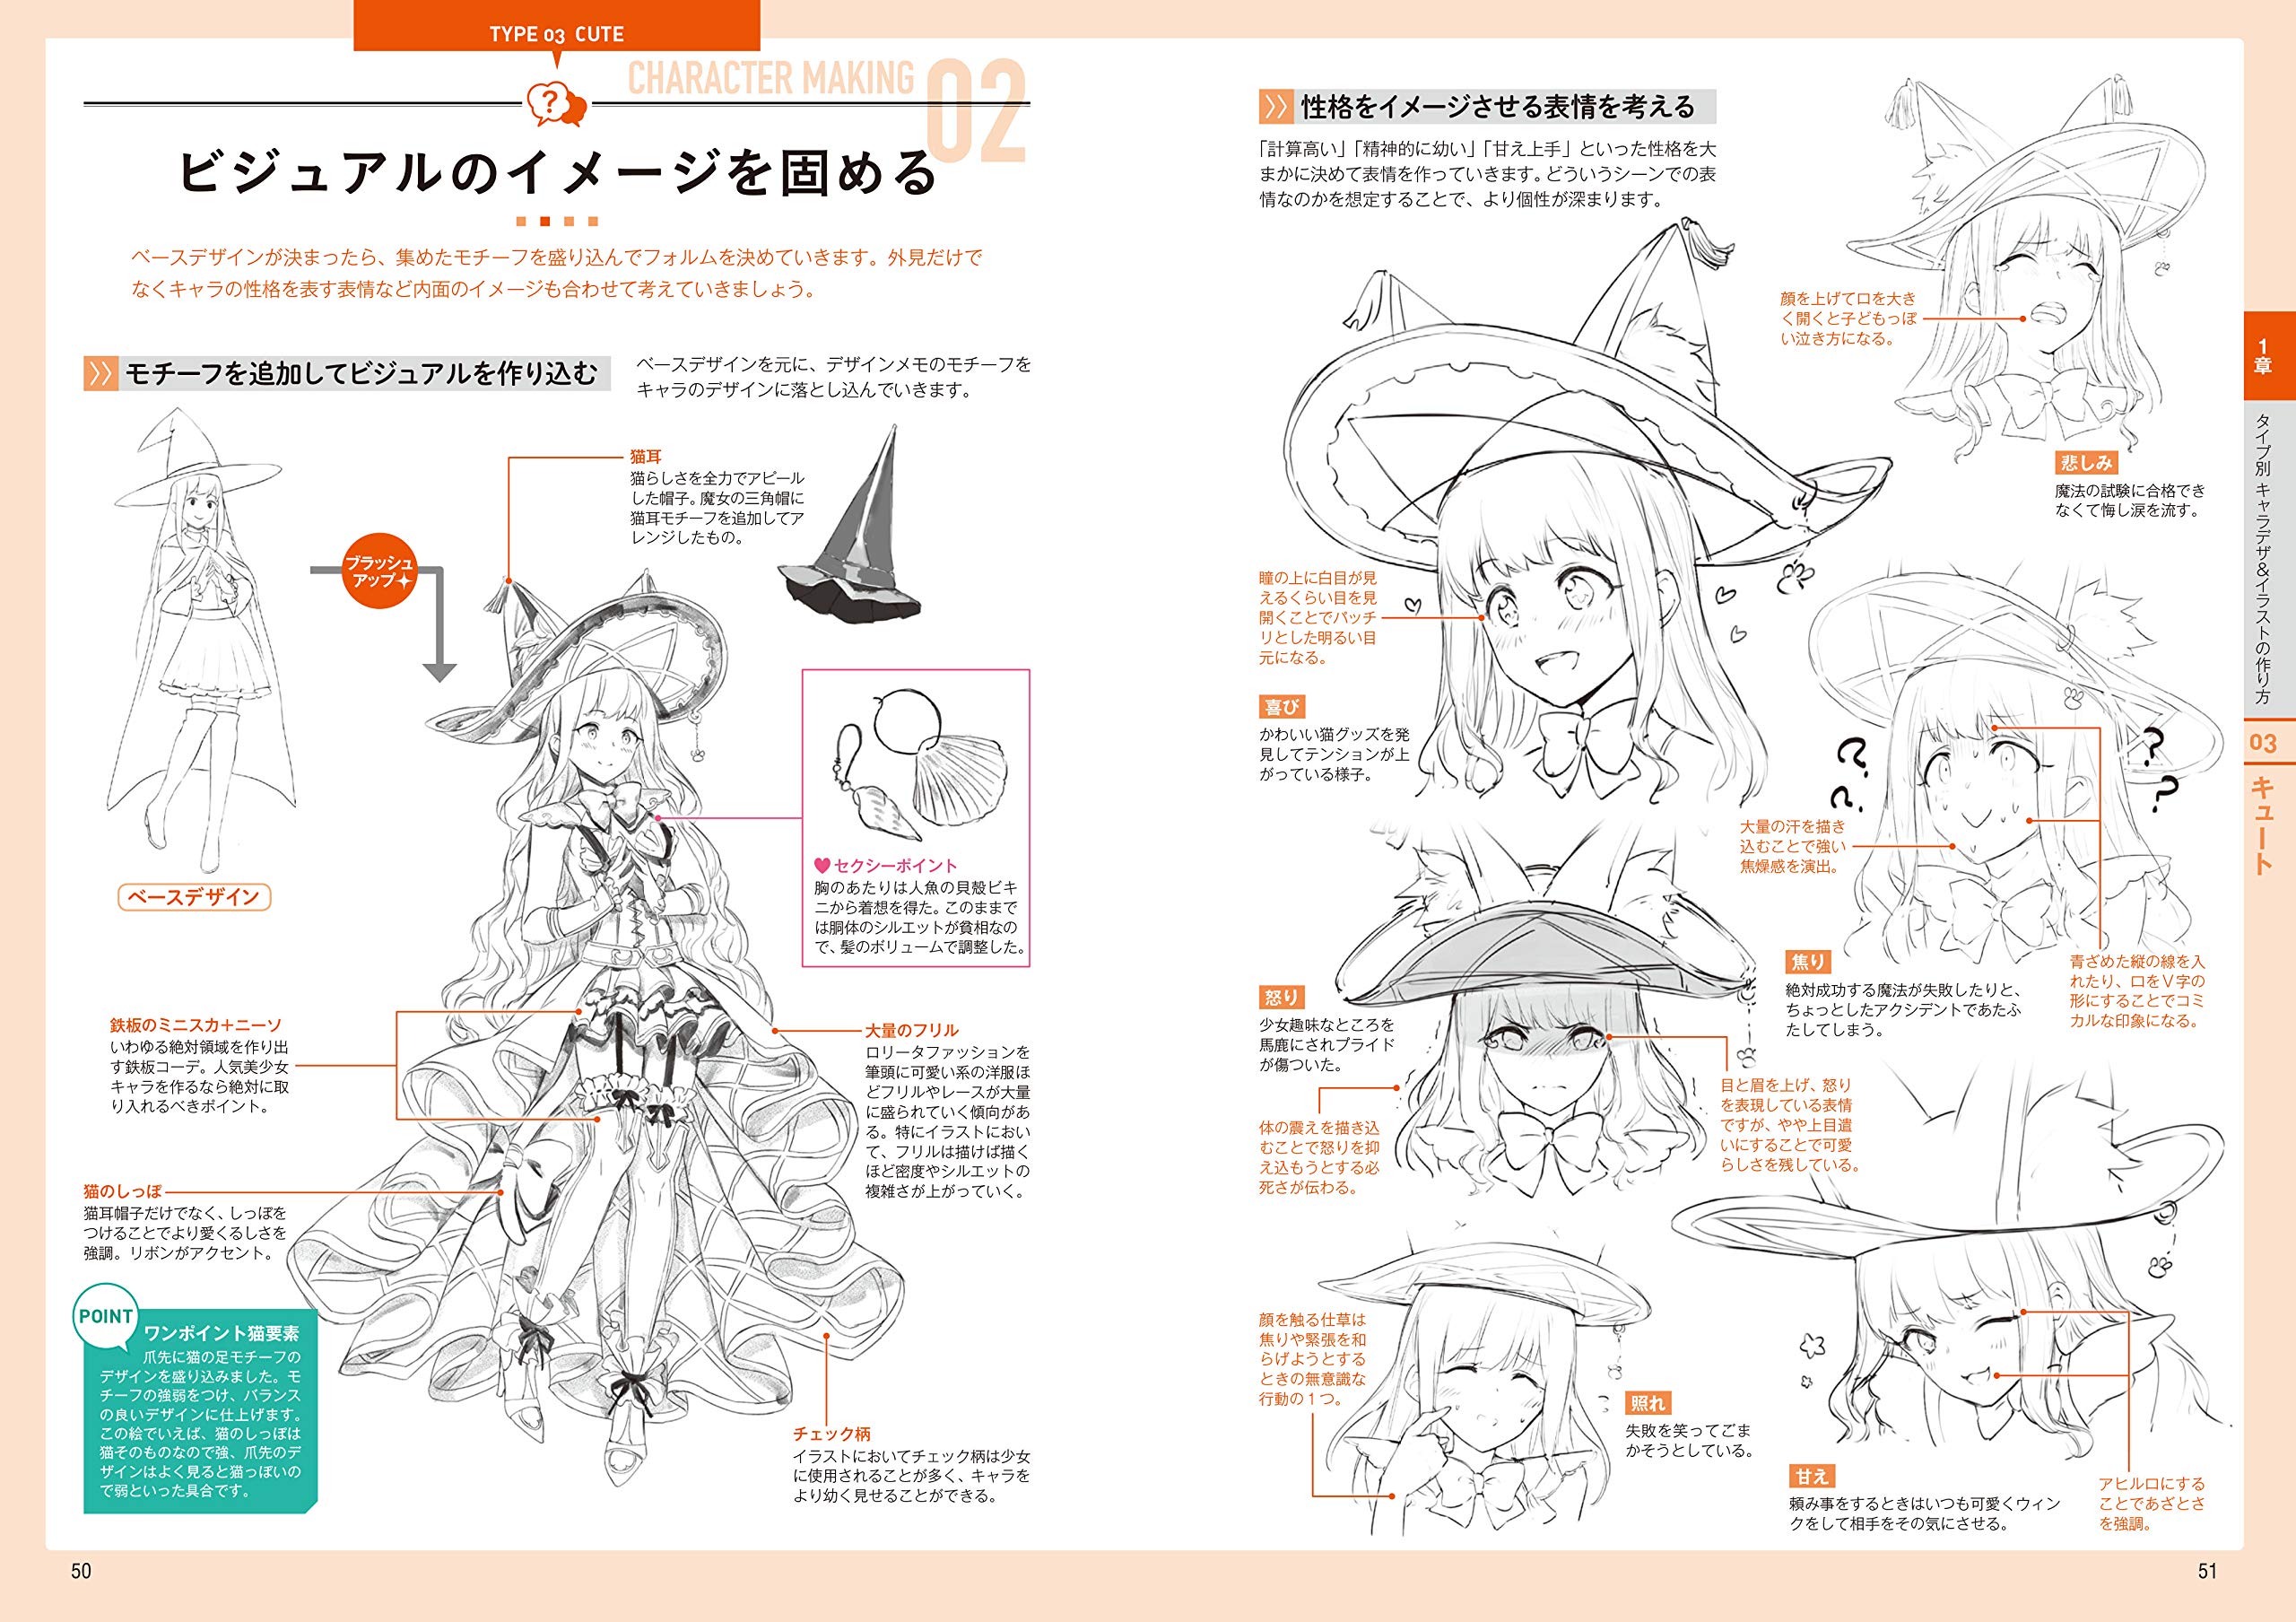 ArtStation - character concept game/comic/manga/anime styles CHARACTER SHEET